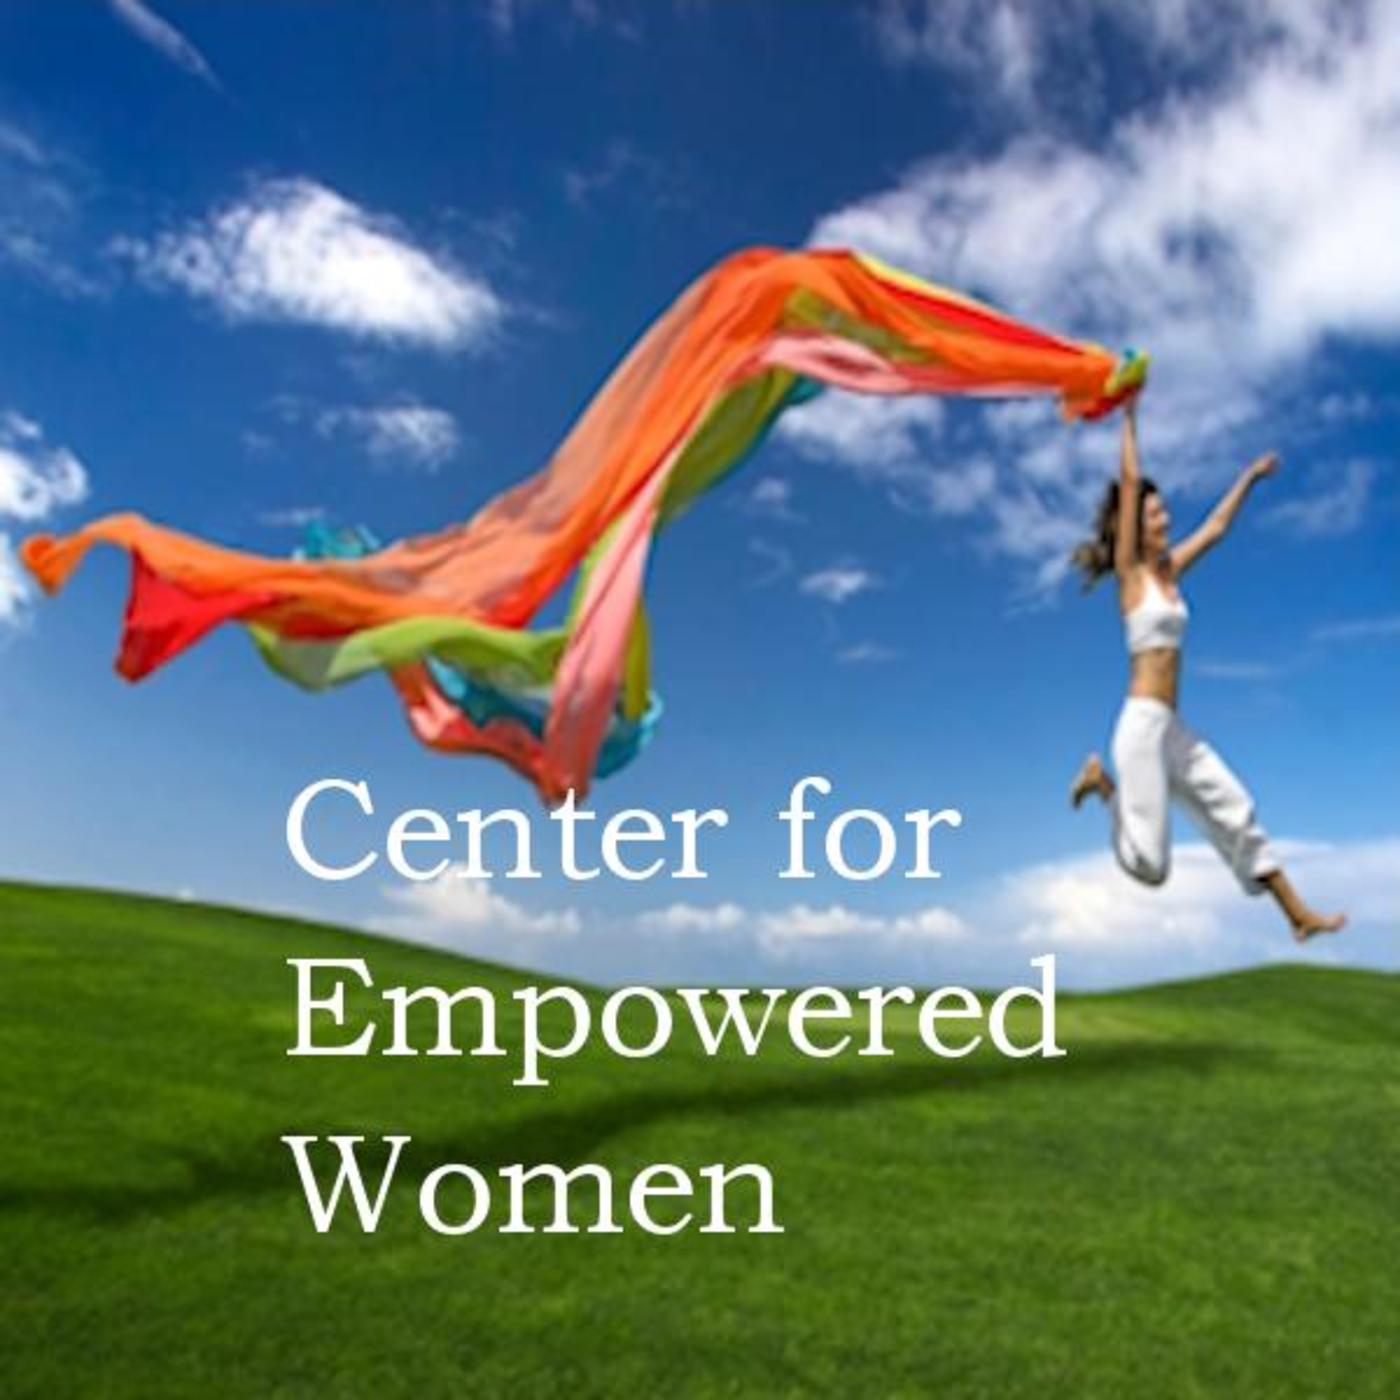 Center for Empowered Women